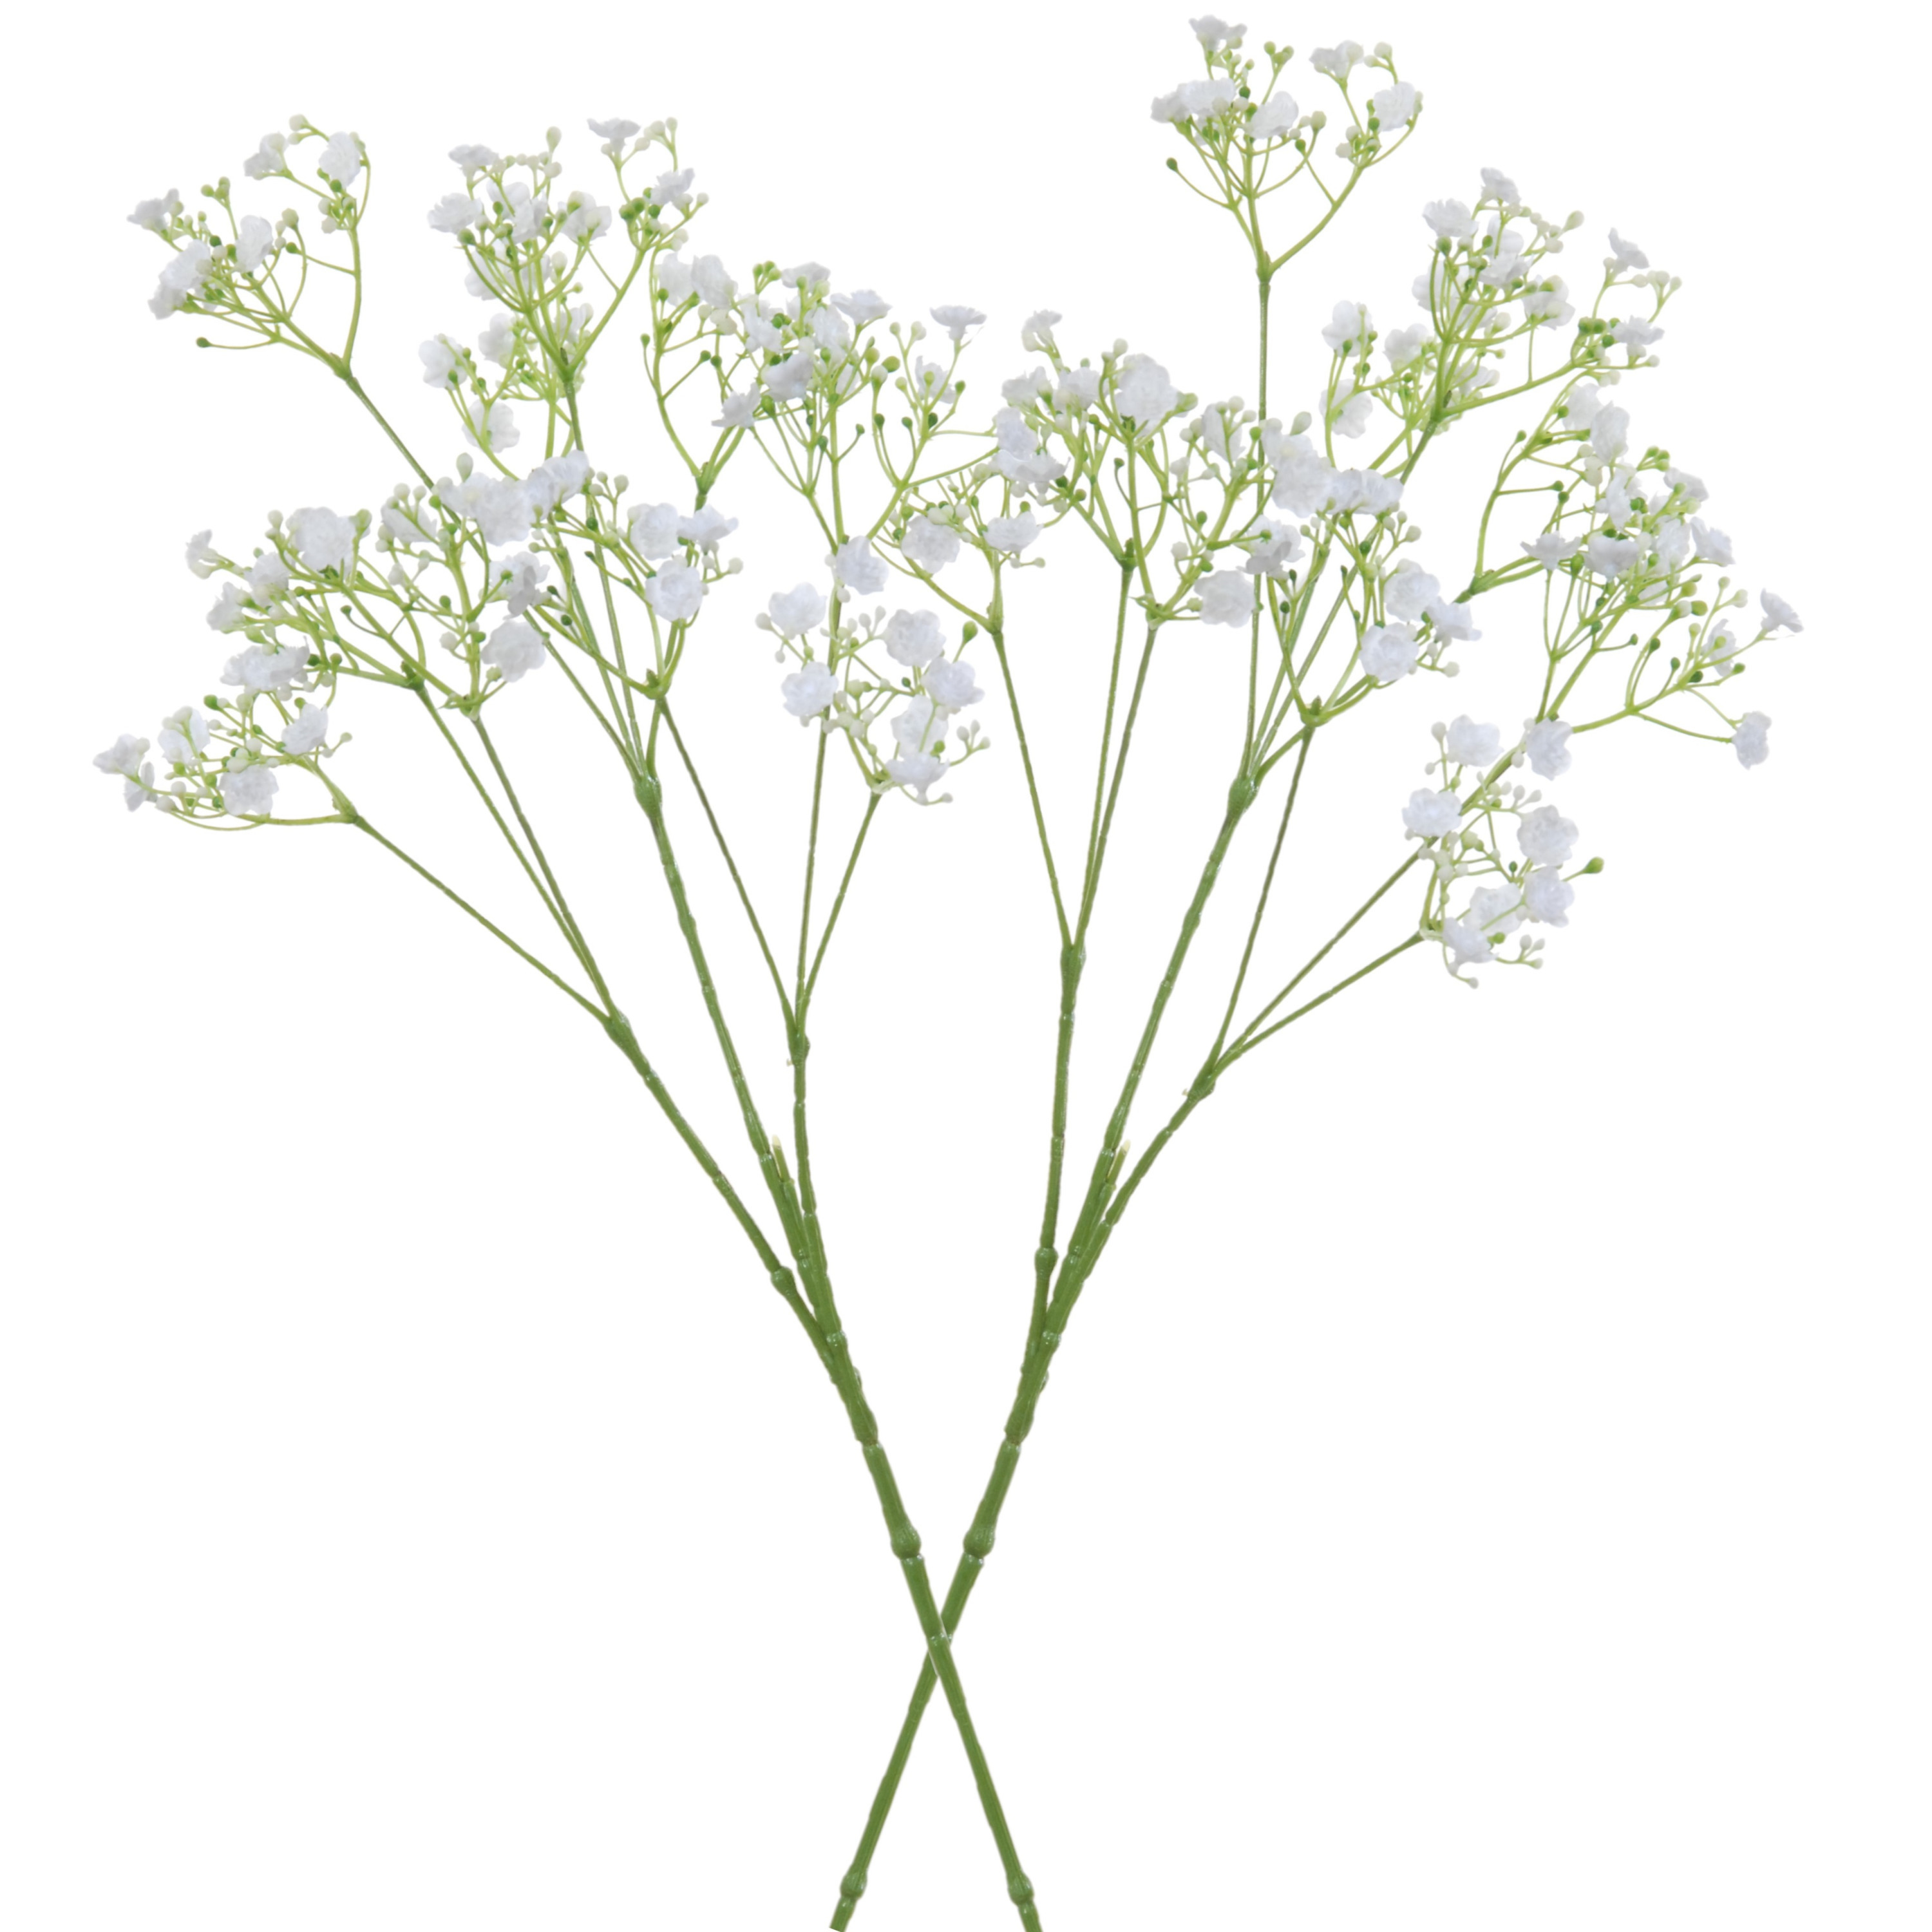 2x stuks kunstbloemen Gipskruid/Gypsophila takken wit 70 cm -